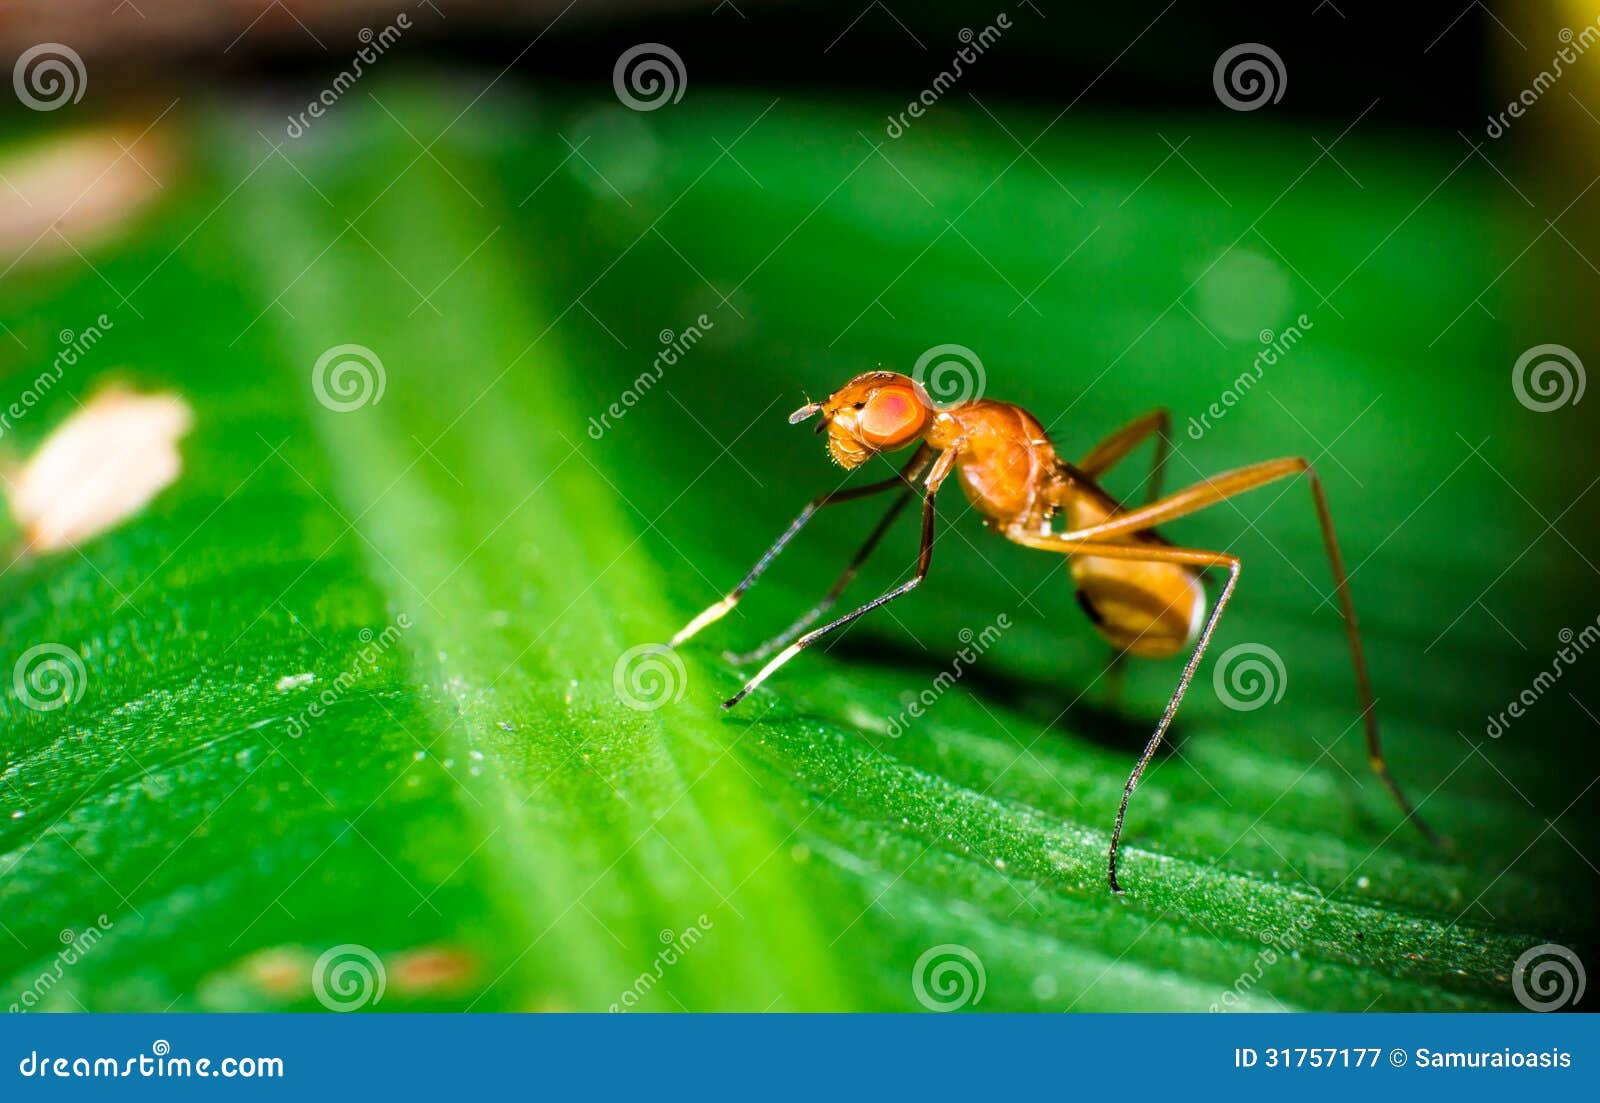 Formiga da mosca. Natureza social do inseto macro preto